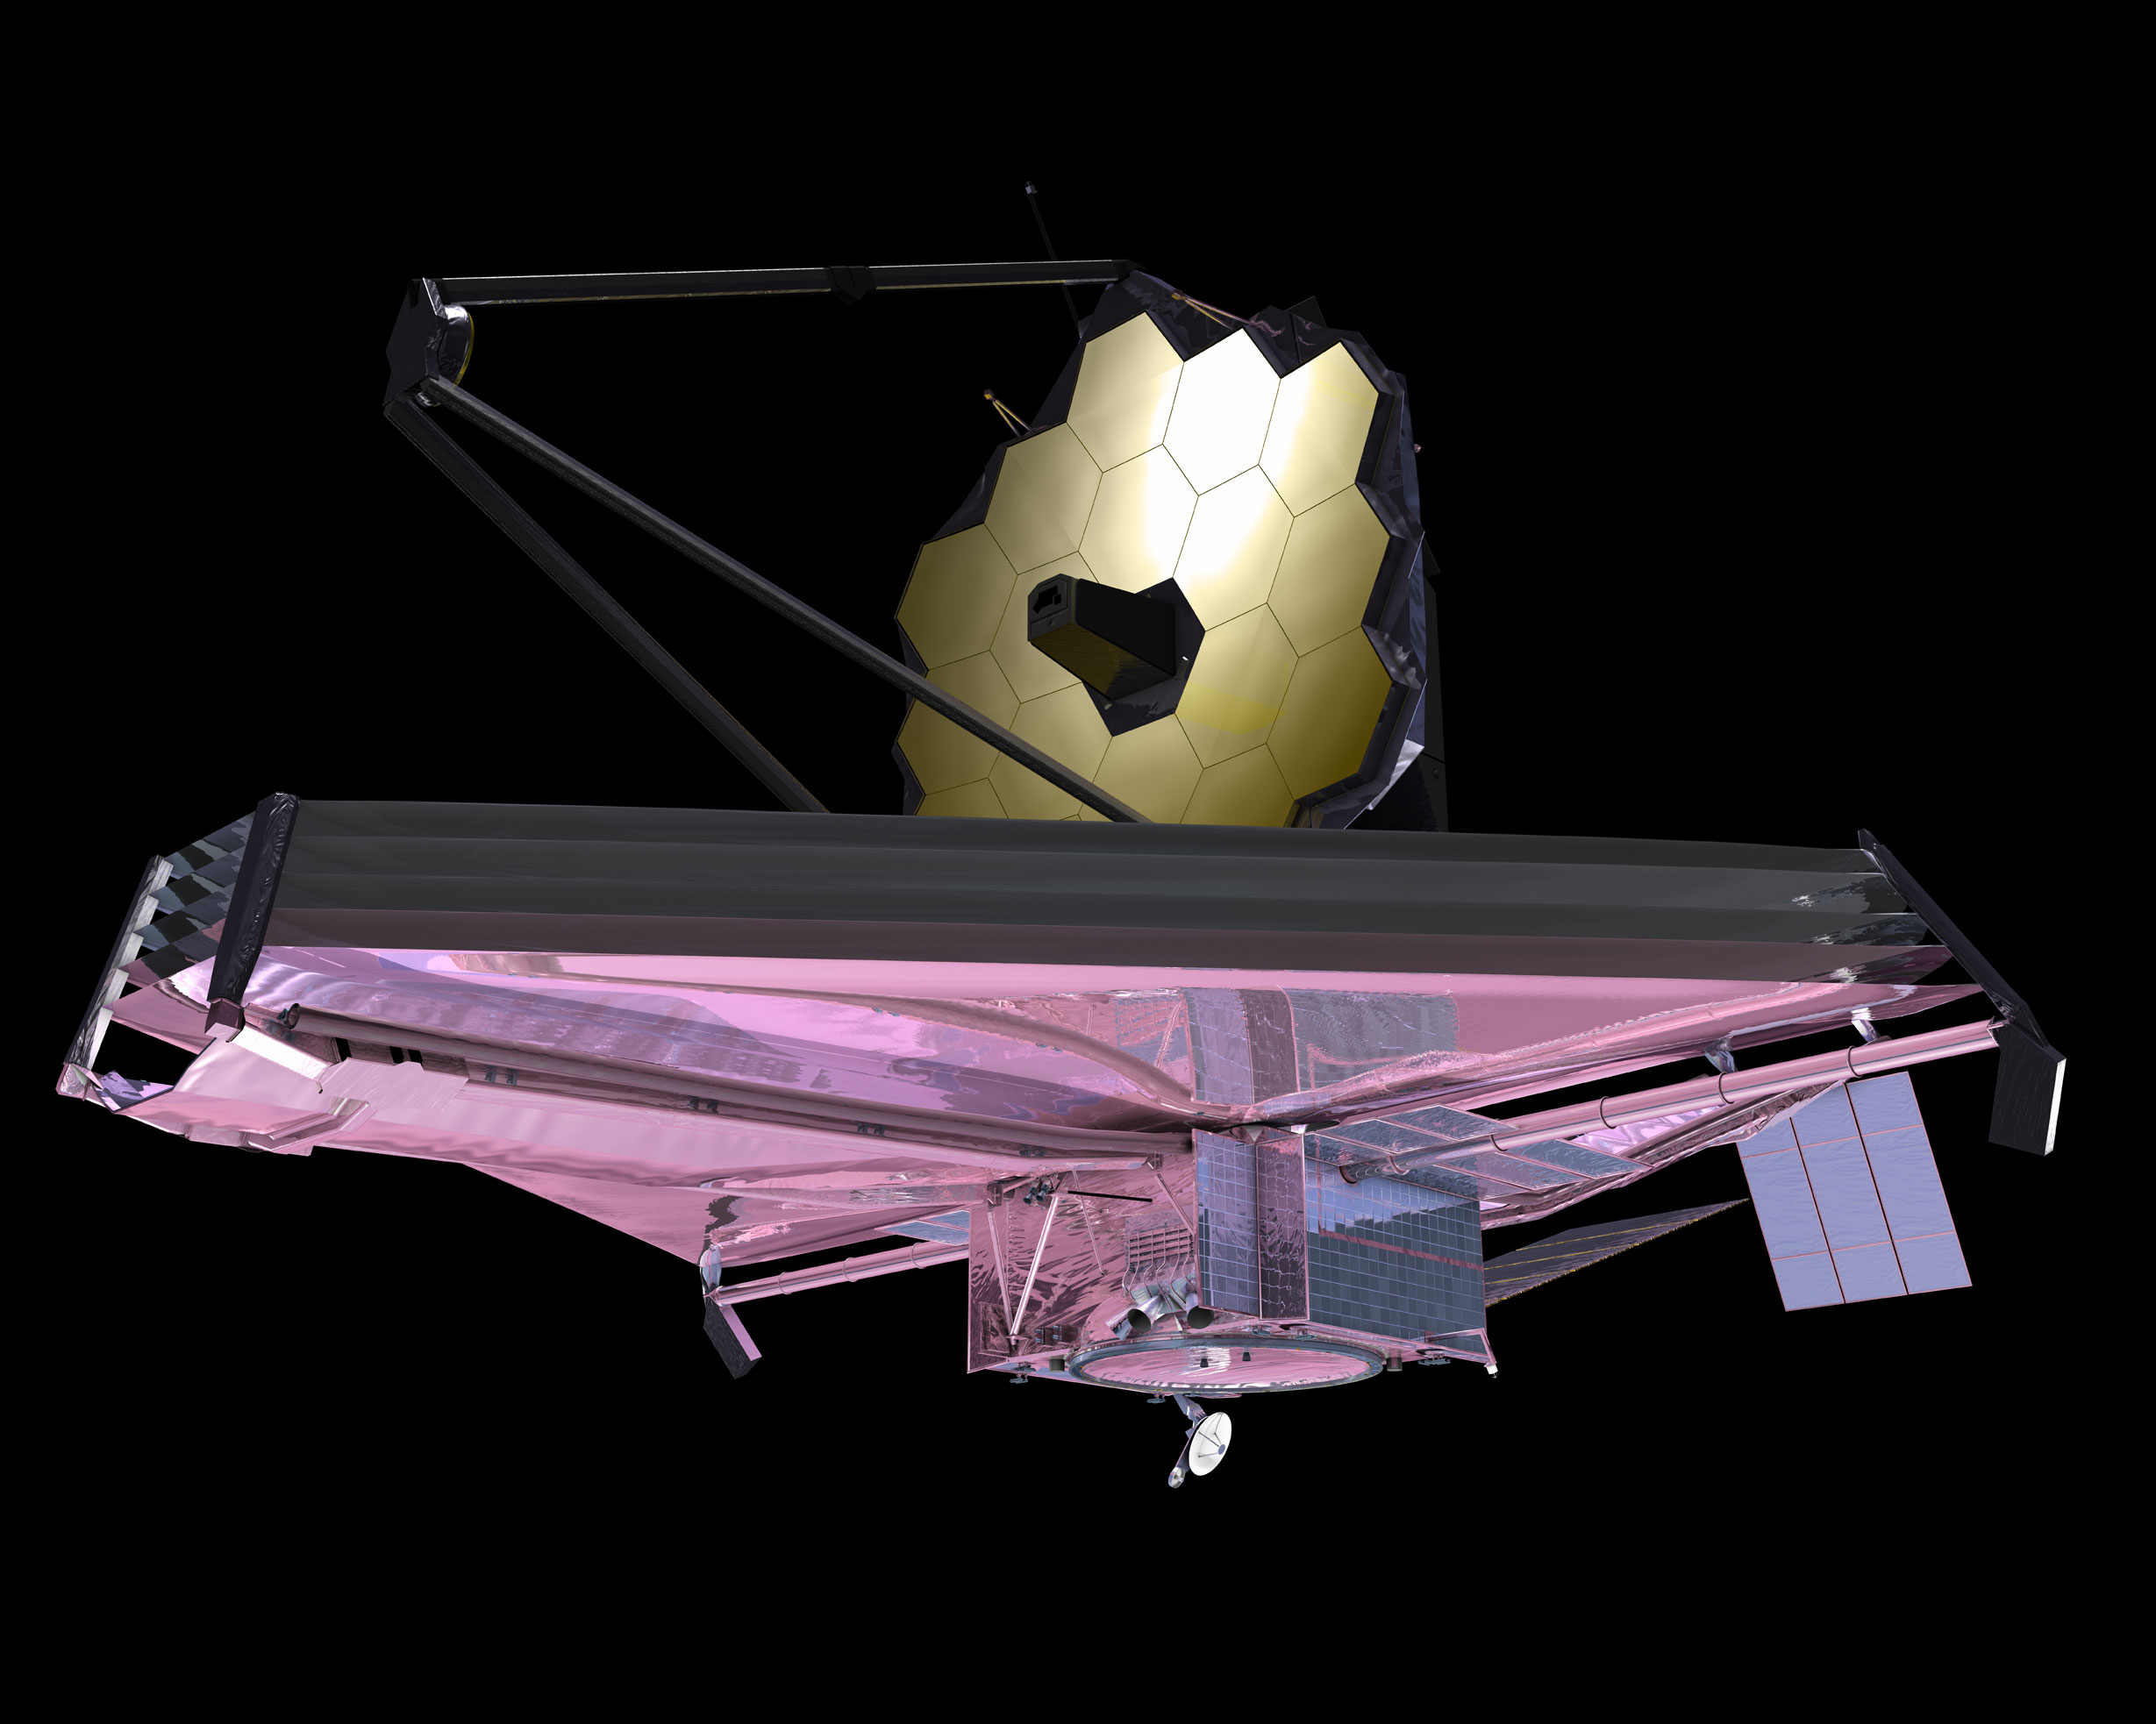 james webb telescope original launch date